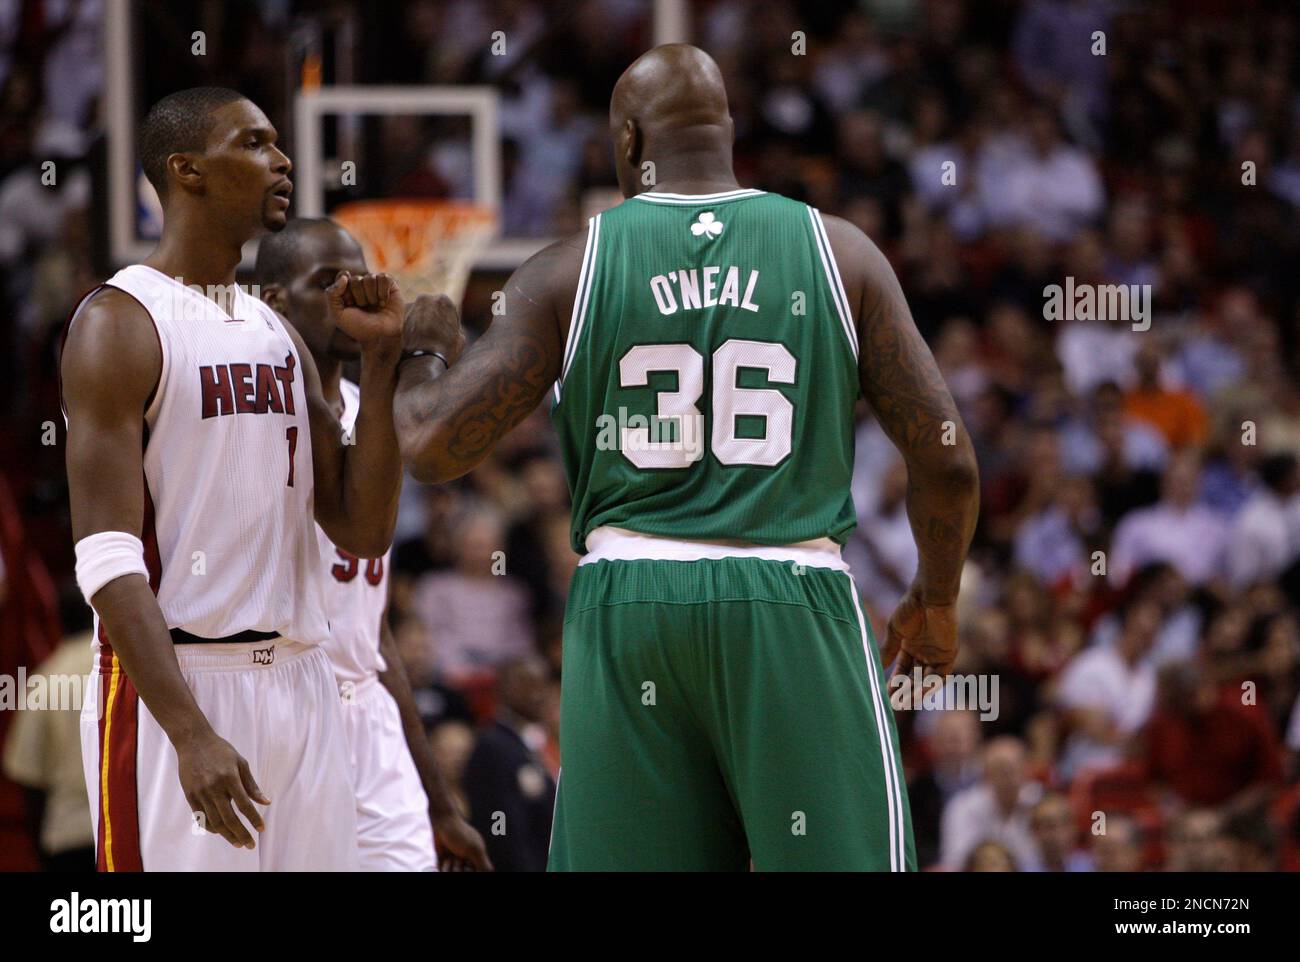 Boston Celtics vs. Miami Heat, NBA Full Game, November 11, 2010